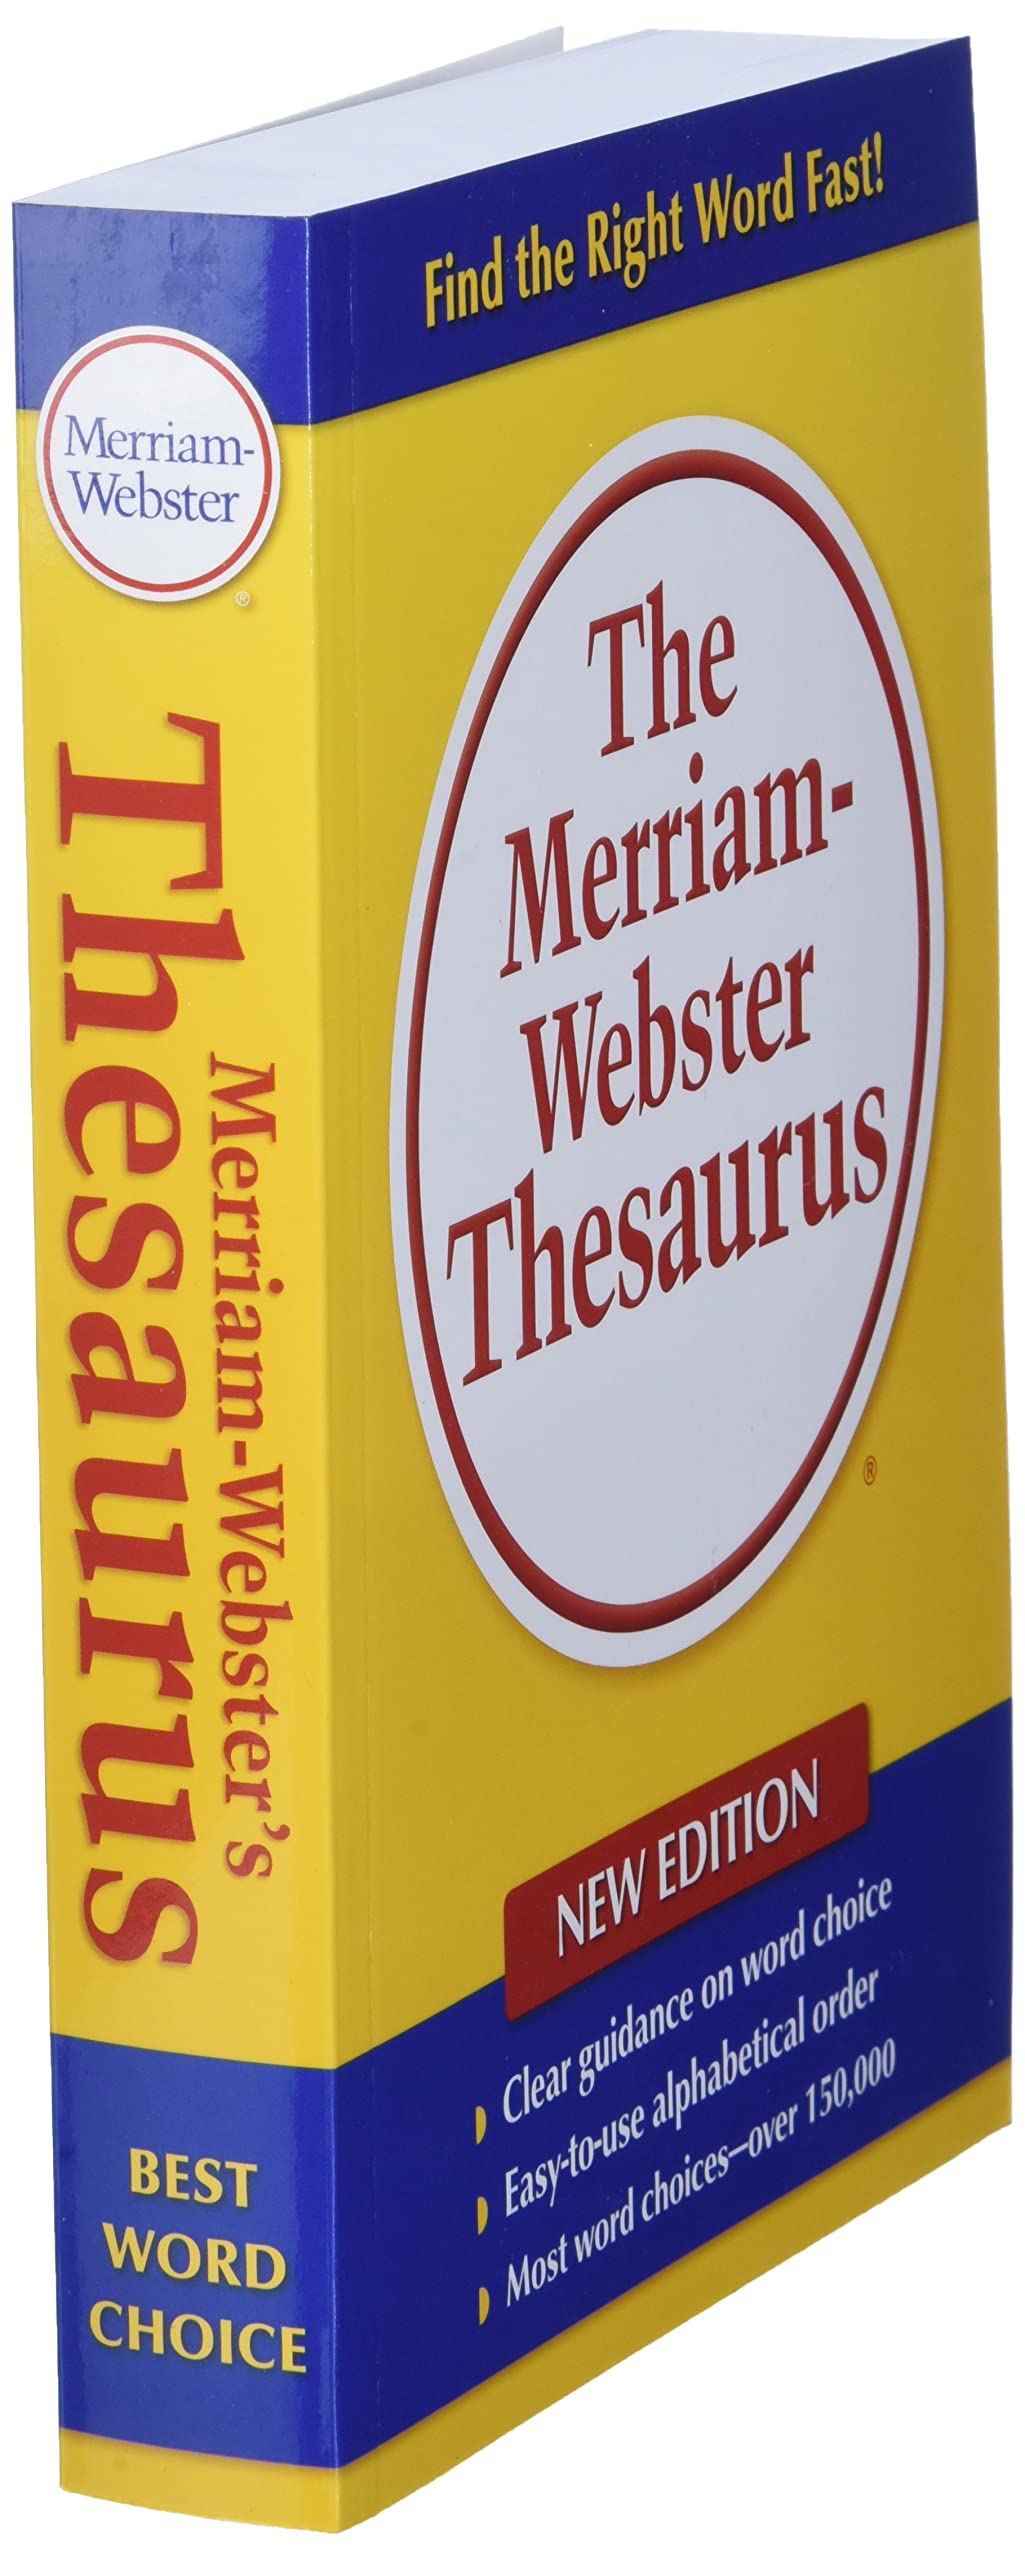 Mua The Merriam Webster Thesaurus Newest Edition Trade Paperback Trên Amazon Mỹ Chính Hãng 2874